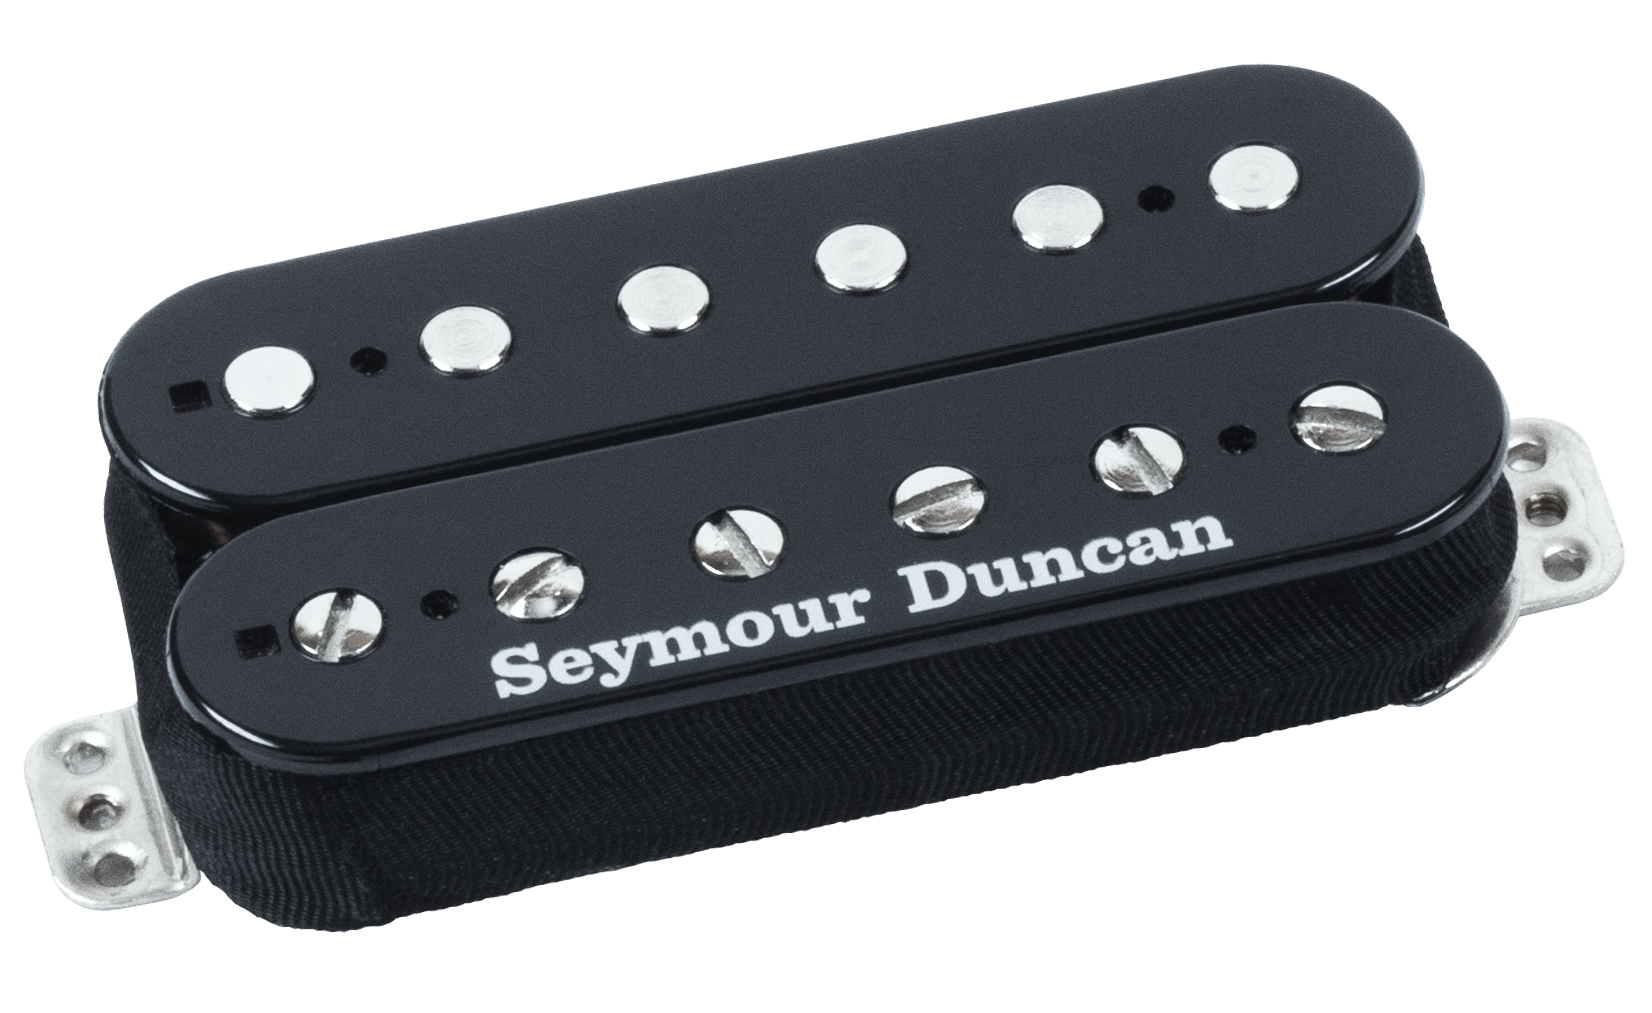 Seymour Duncan Tb-6 Duncan Distortion Trembucker - Bridge - Black - Electric guitar pickup - Variation 2